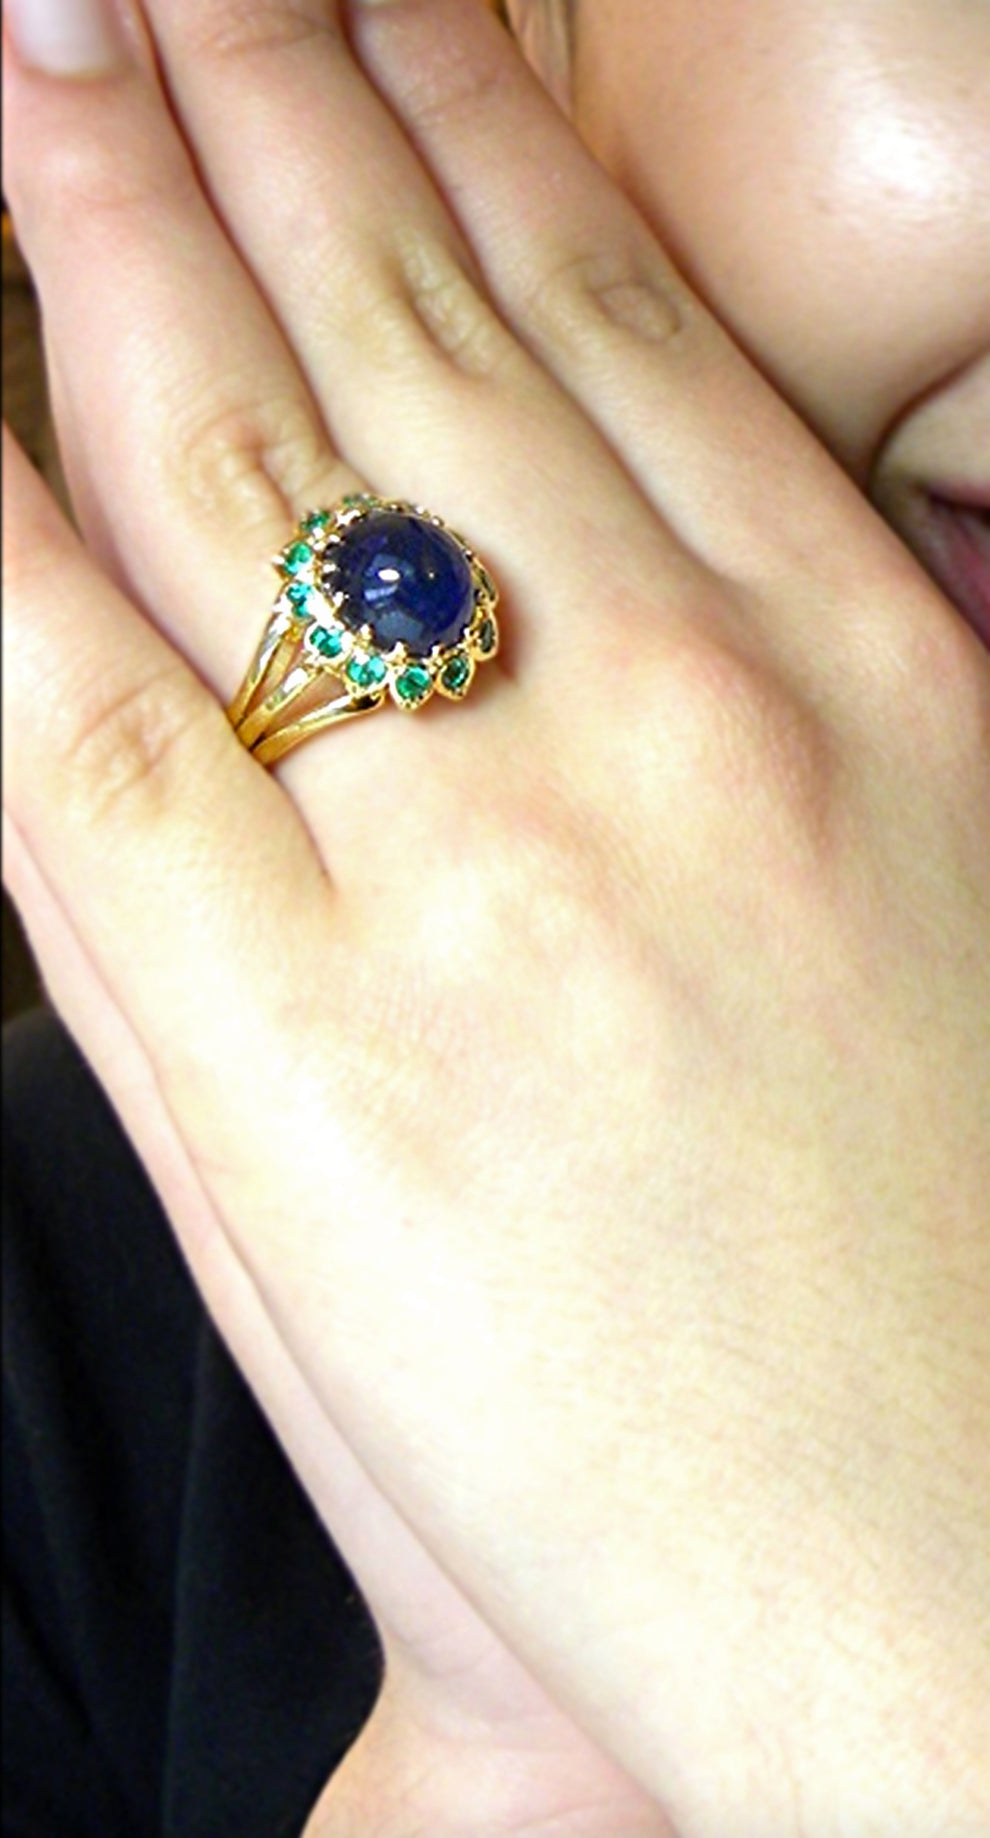 9.00 Carat Cabochon Cut Blue Sapphire Emerald Ring 18k